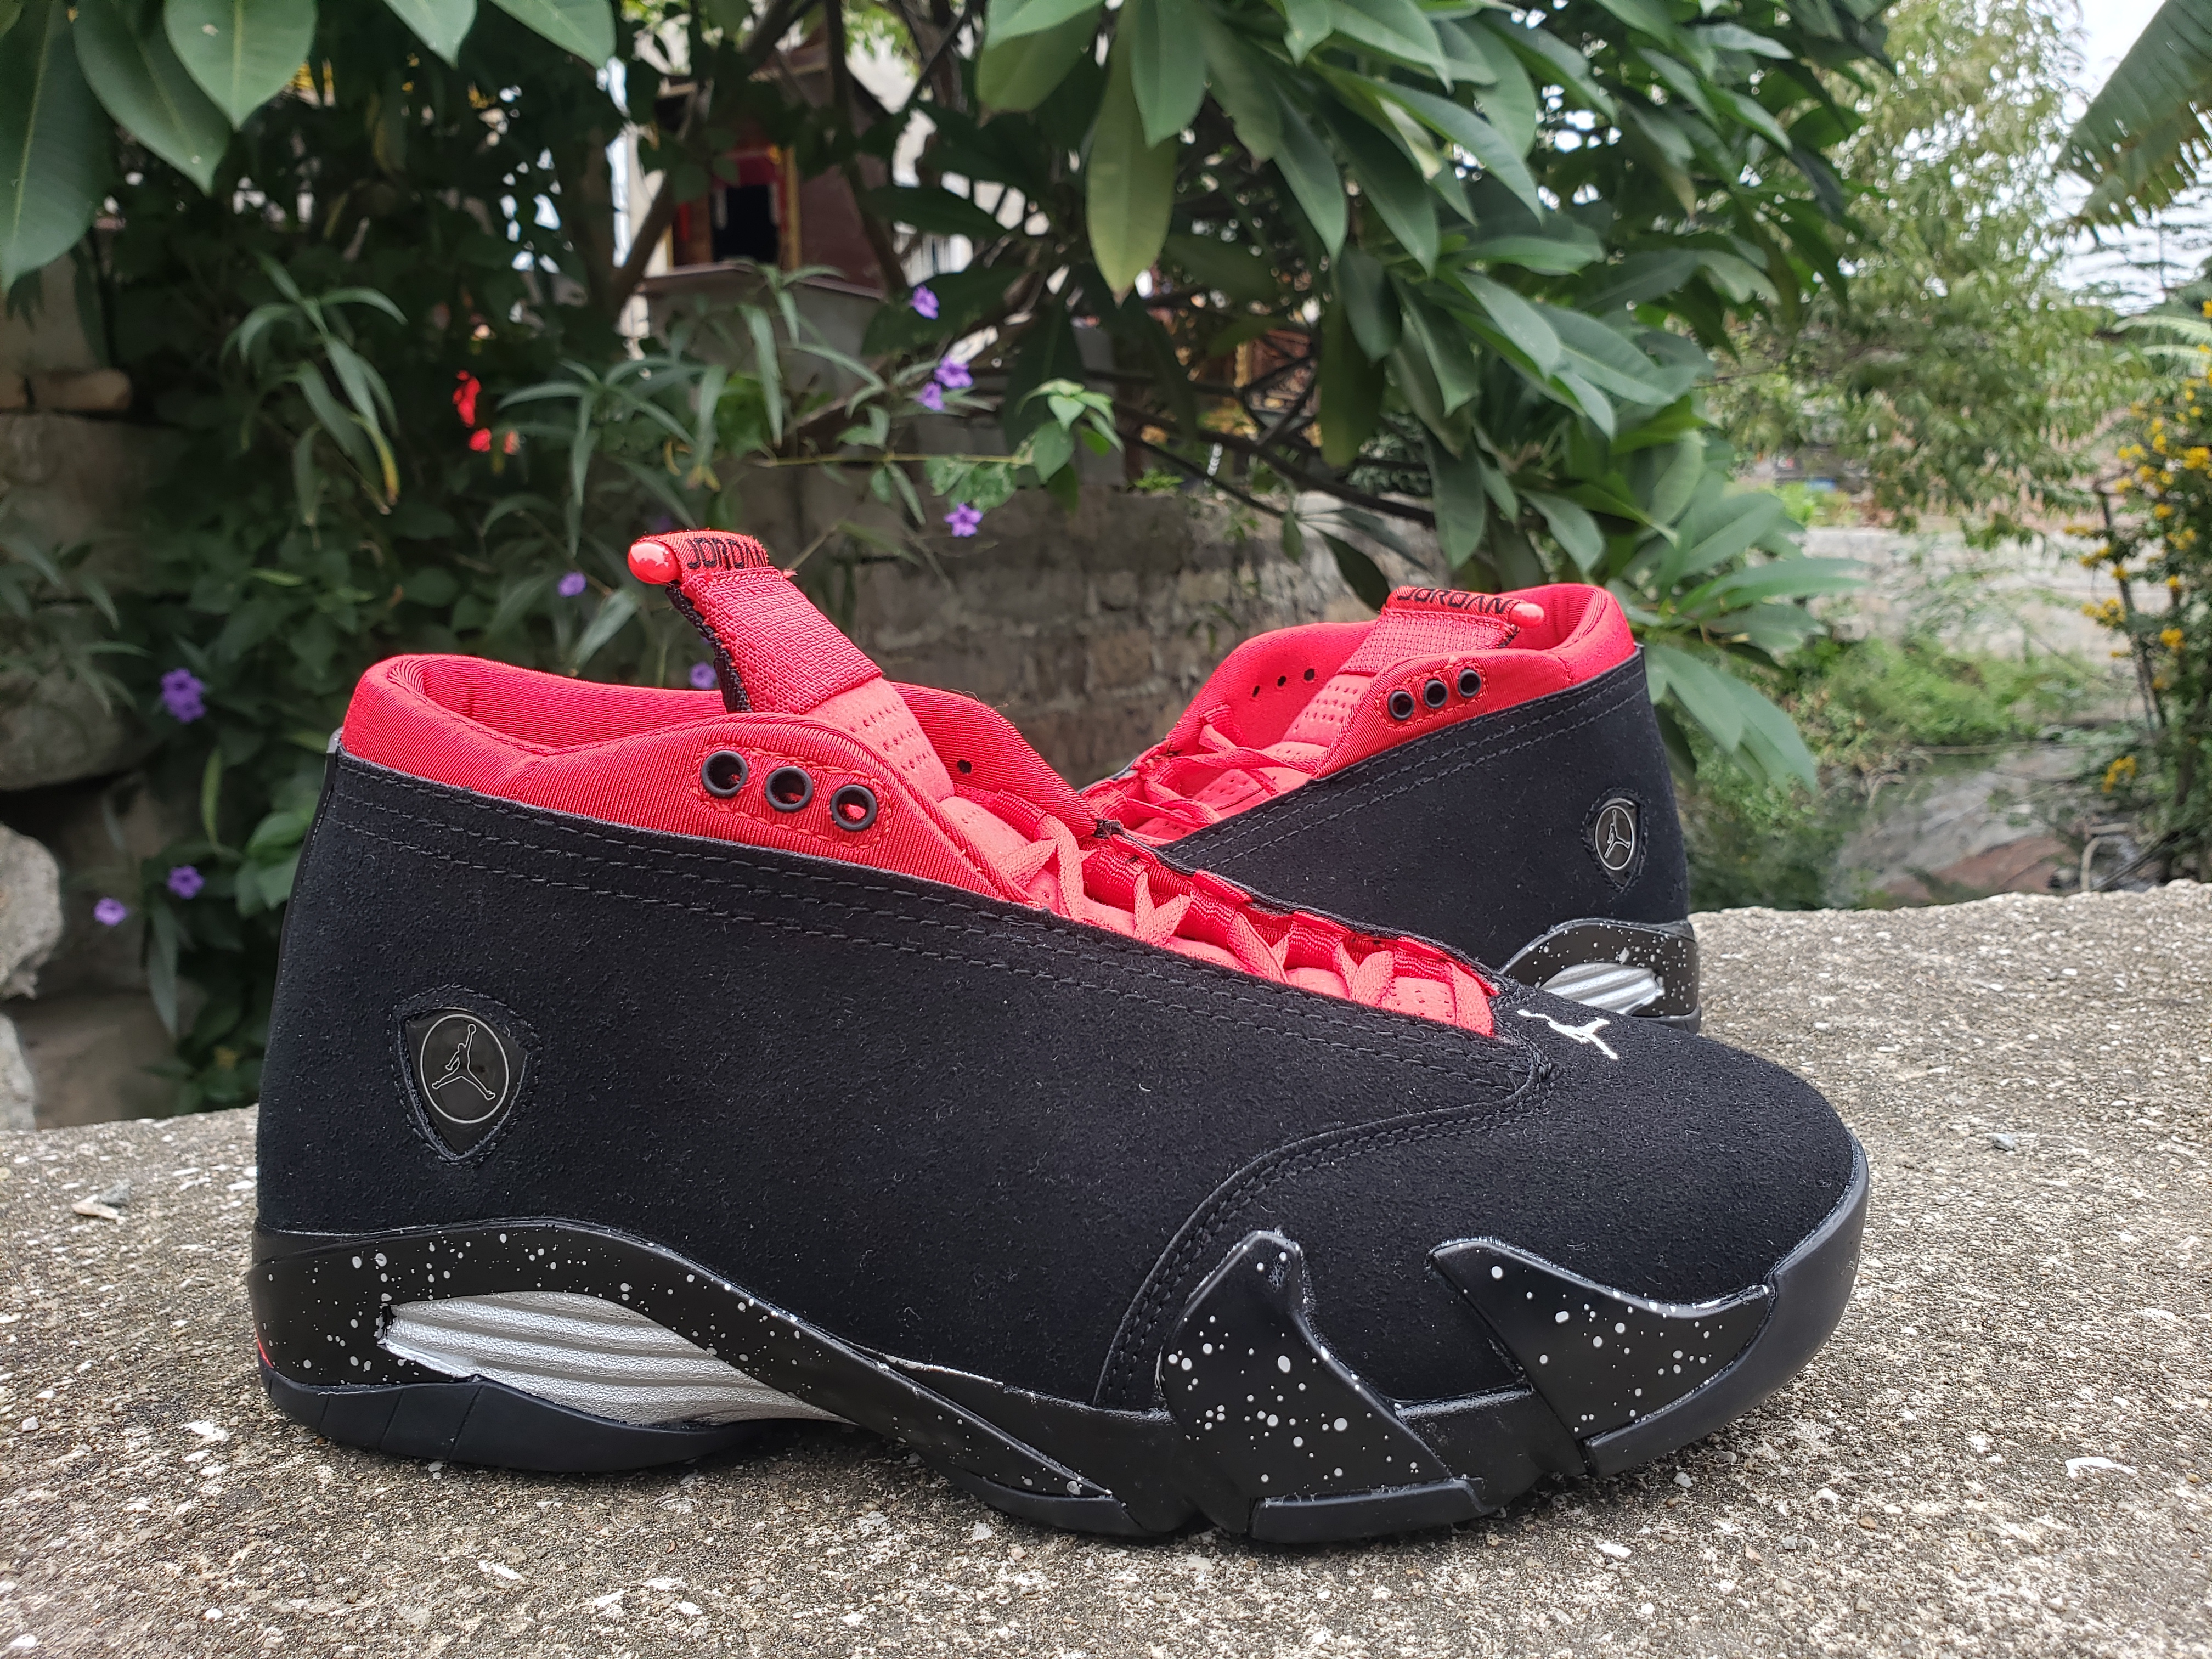 New Air Jordan 14 Mid Black Red Shoes